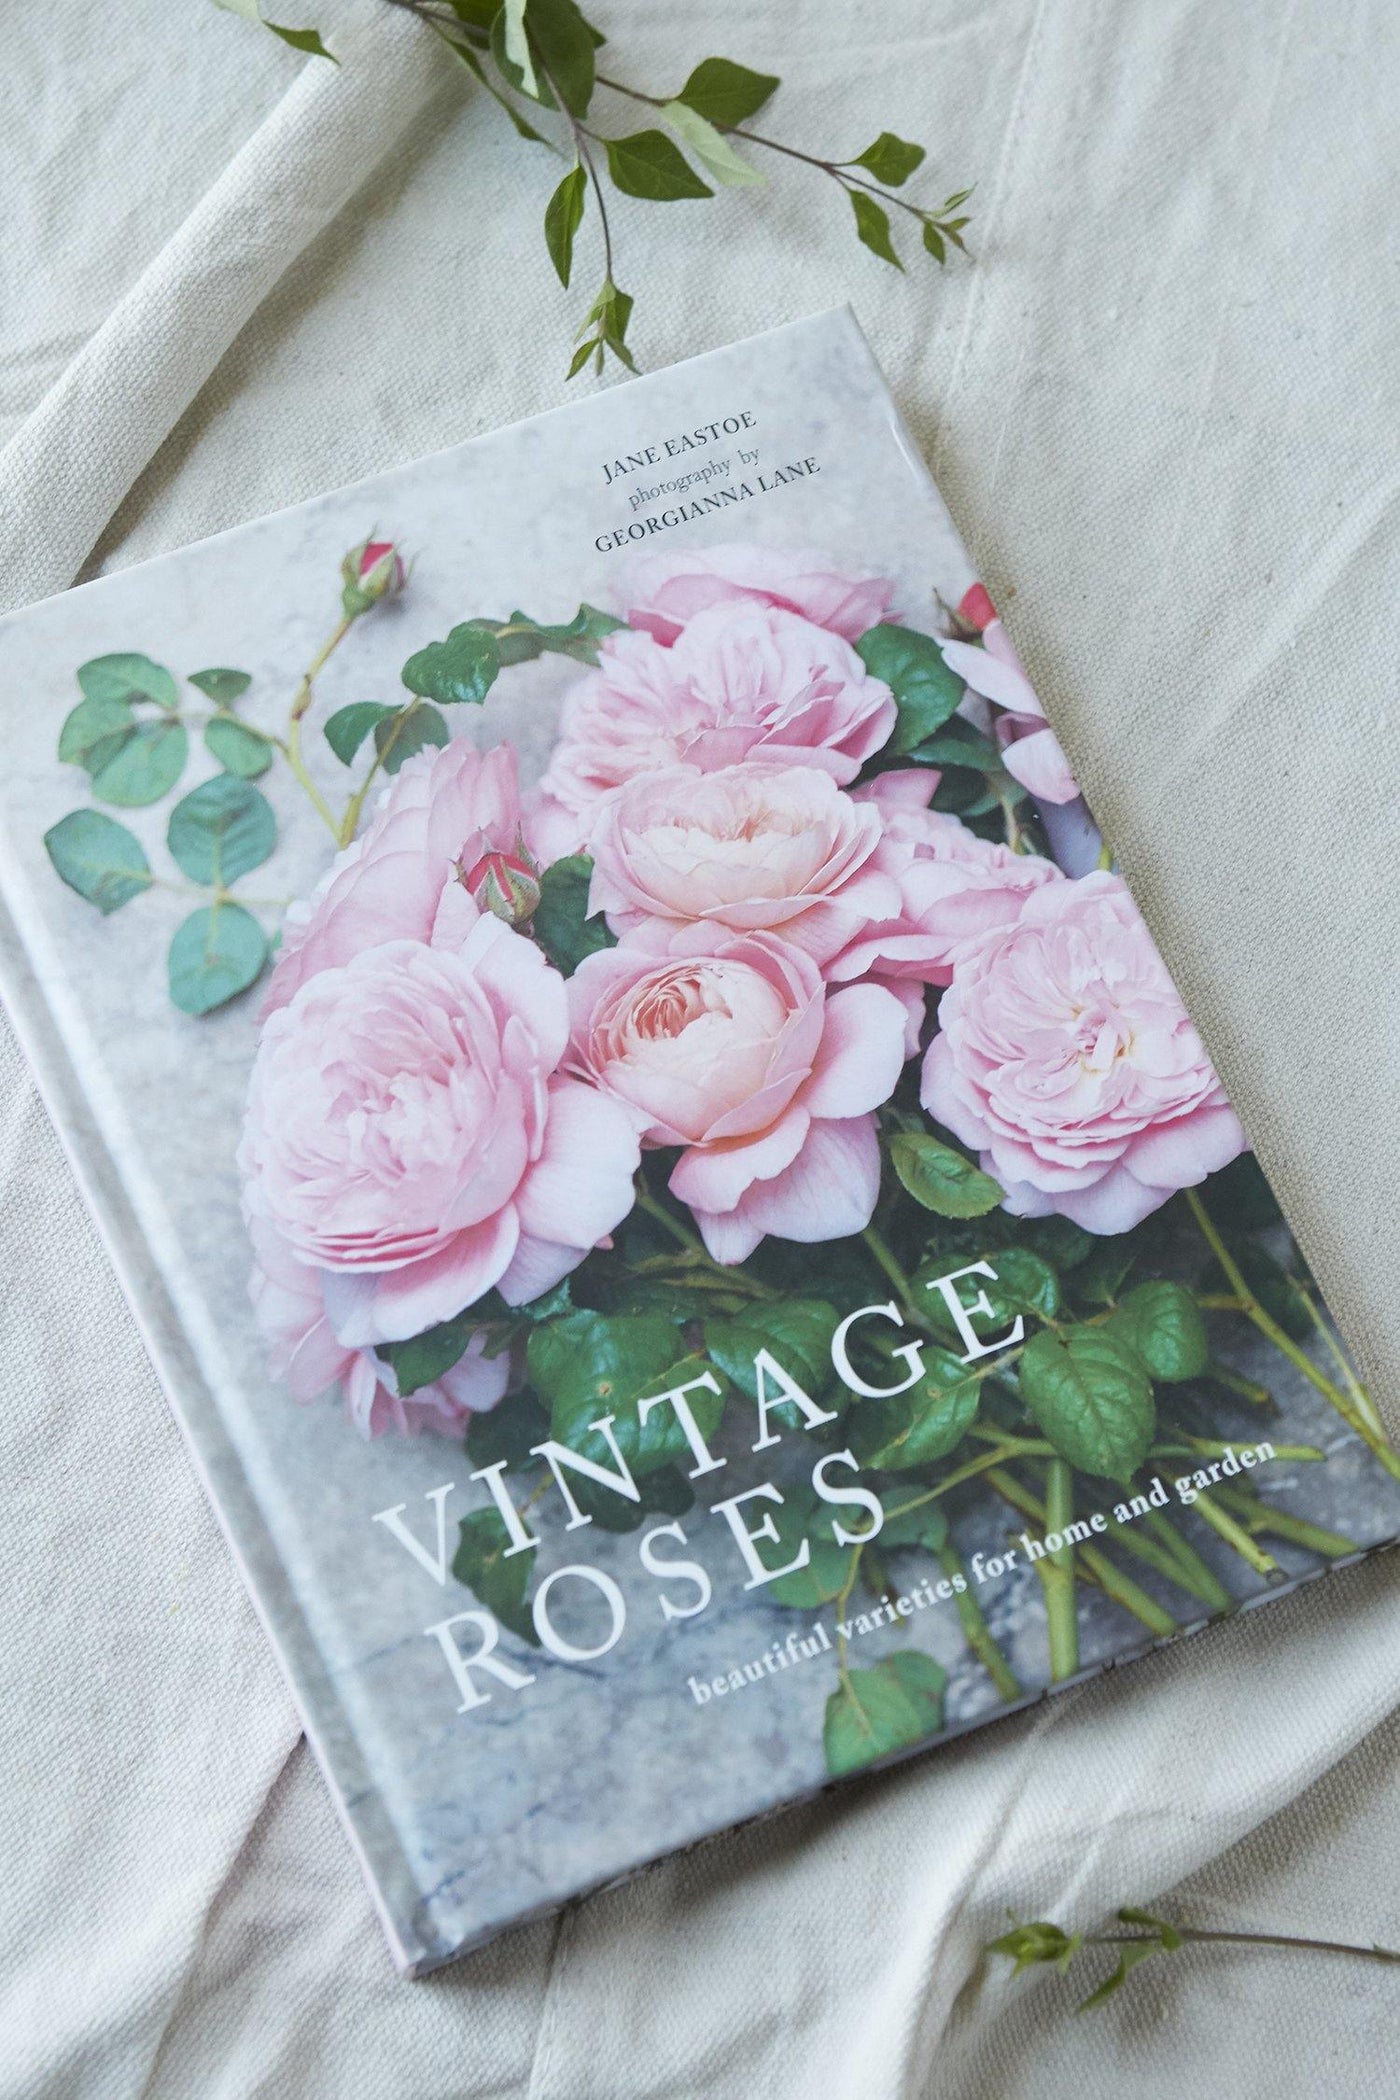 Vintage Roses: Beautiful Varieties For Home & Garden